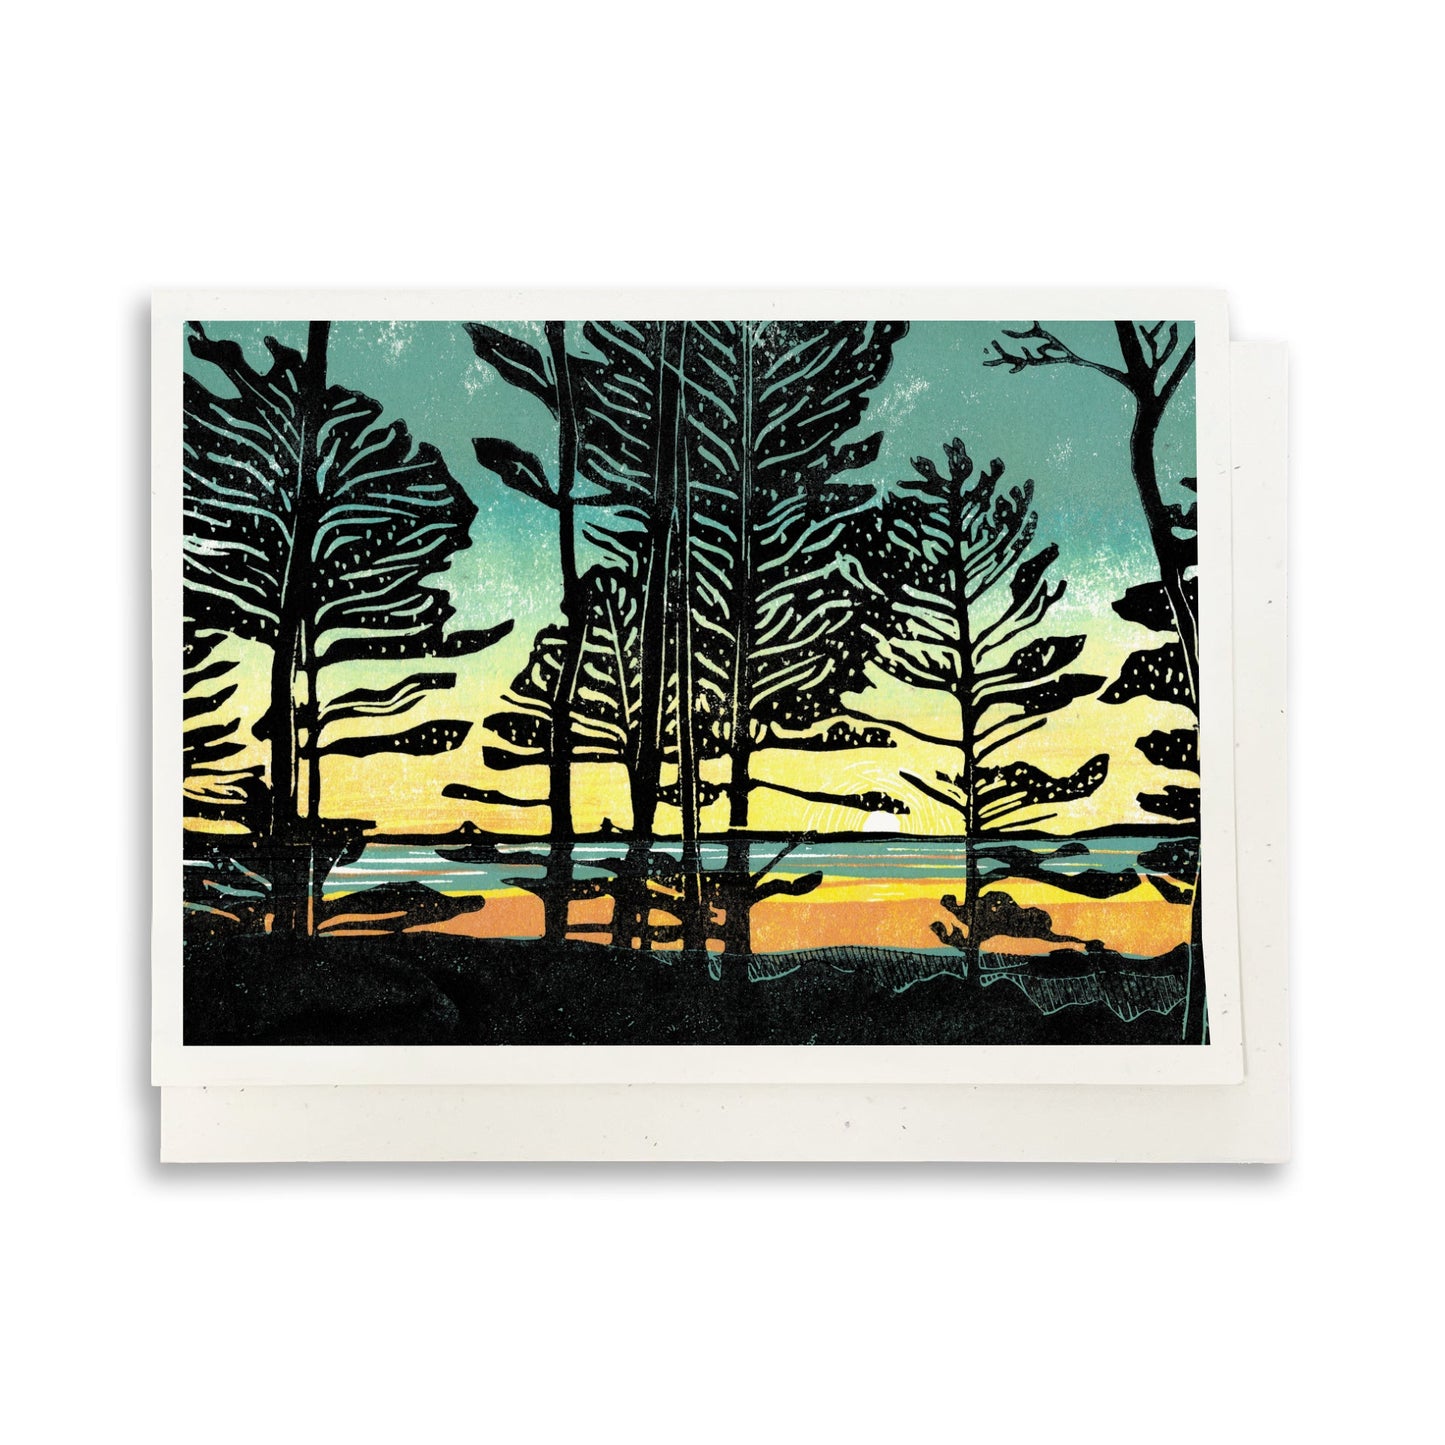 Home sunset lake view greeting card by Natalia Wohletz of Peninsula Prints.